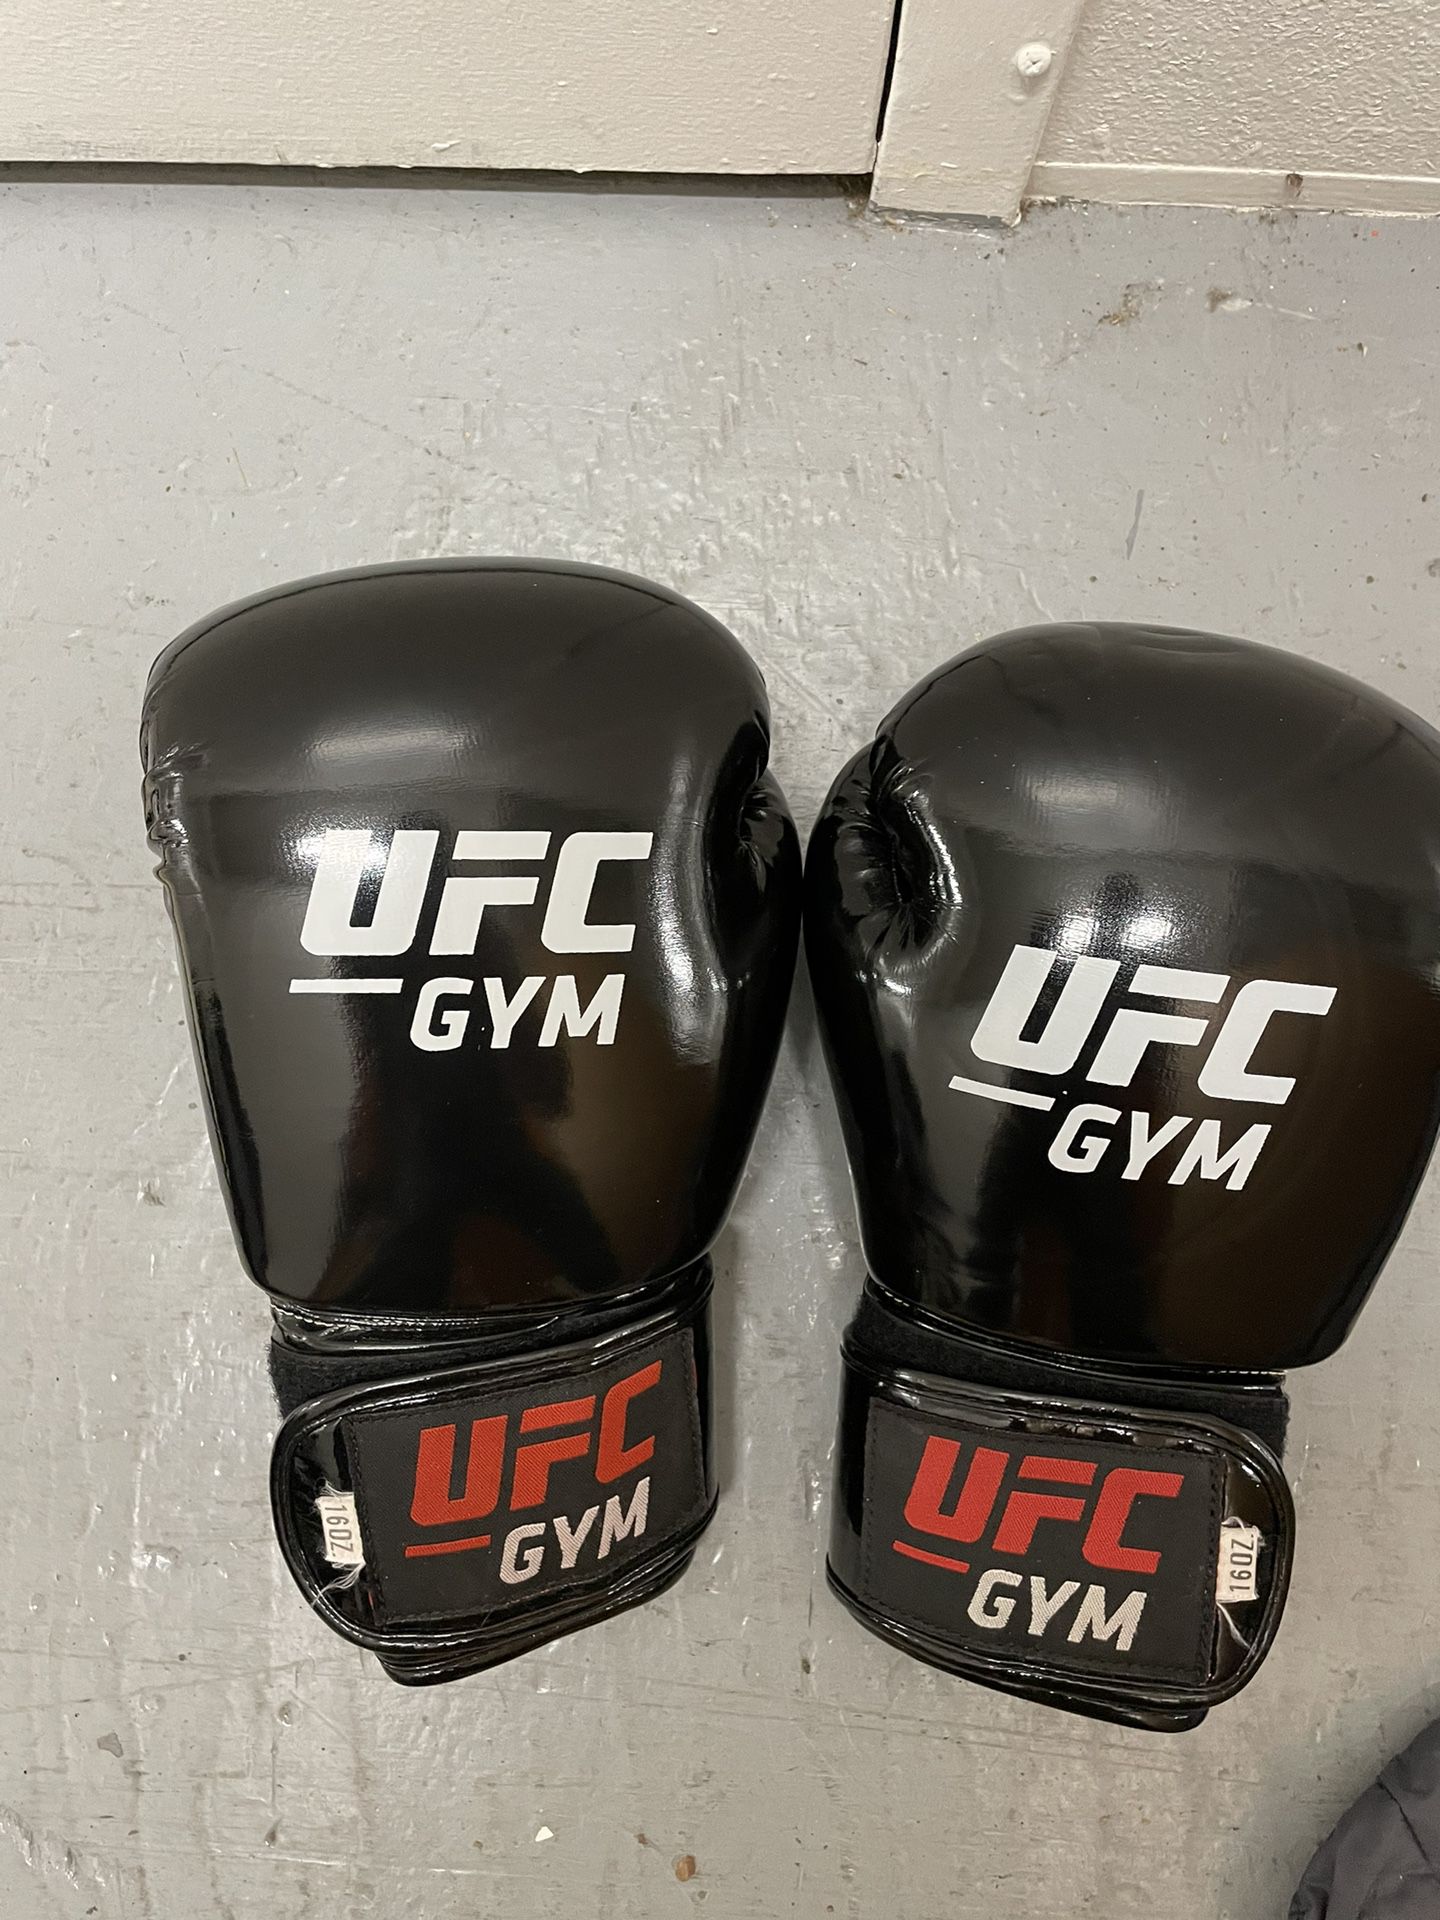 Ufc Boxing Gloves